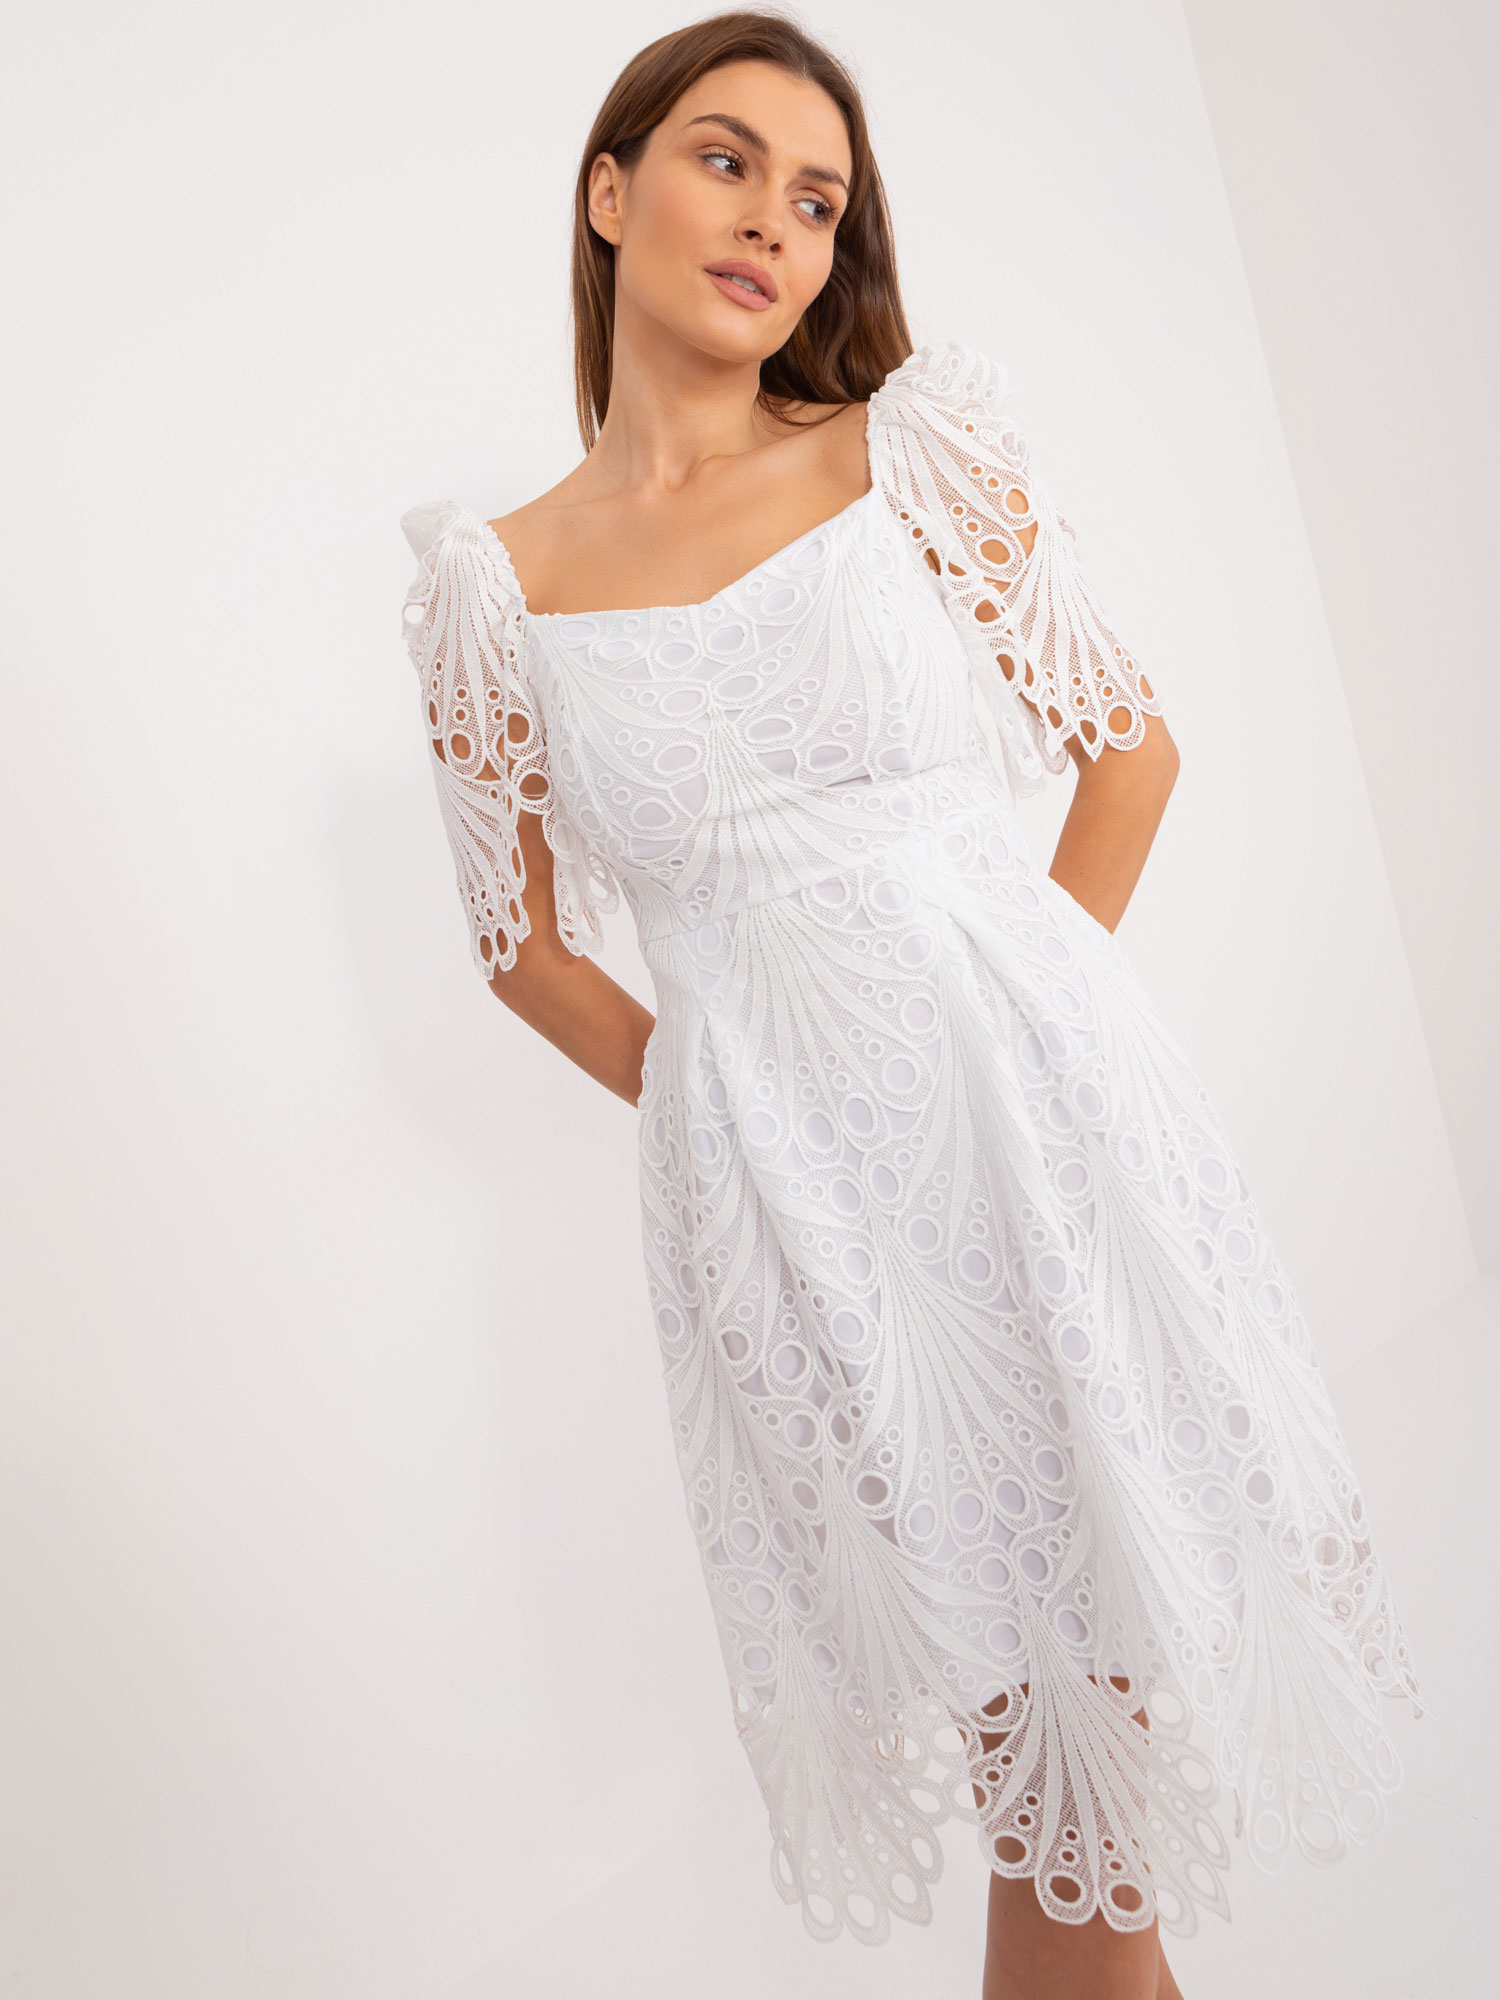 White midi dress with an openwork pattern